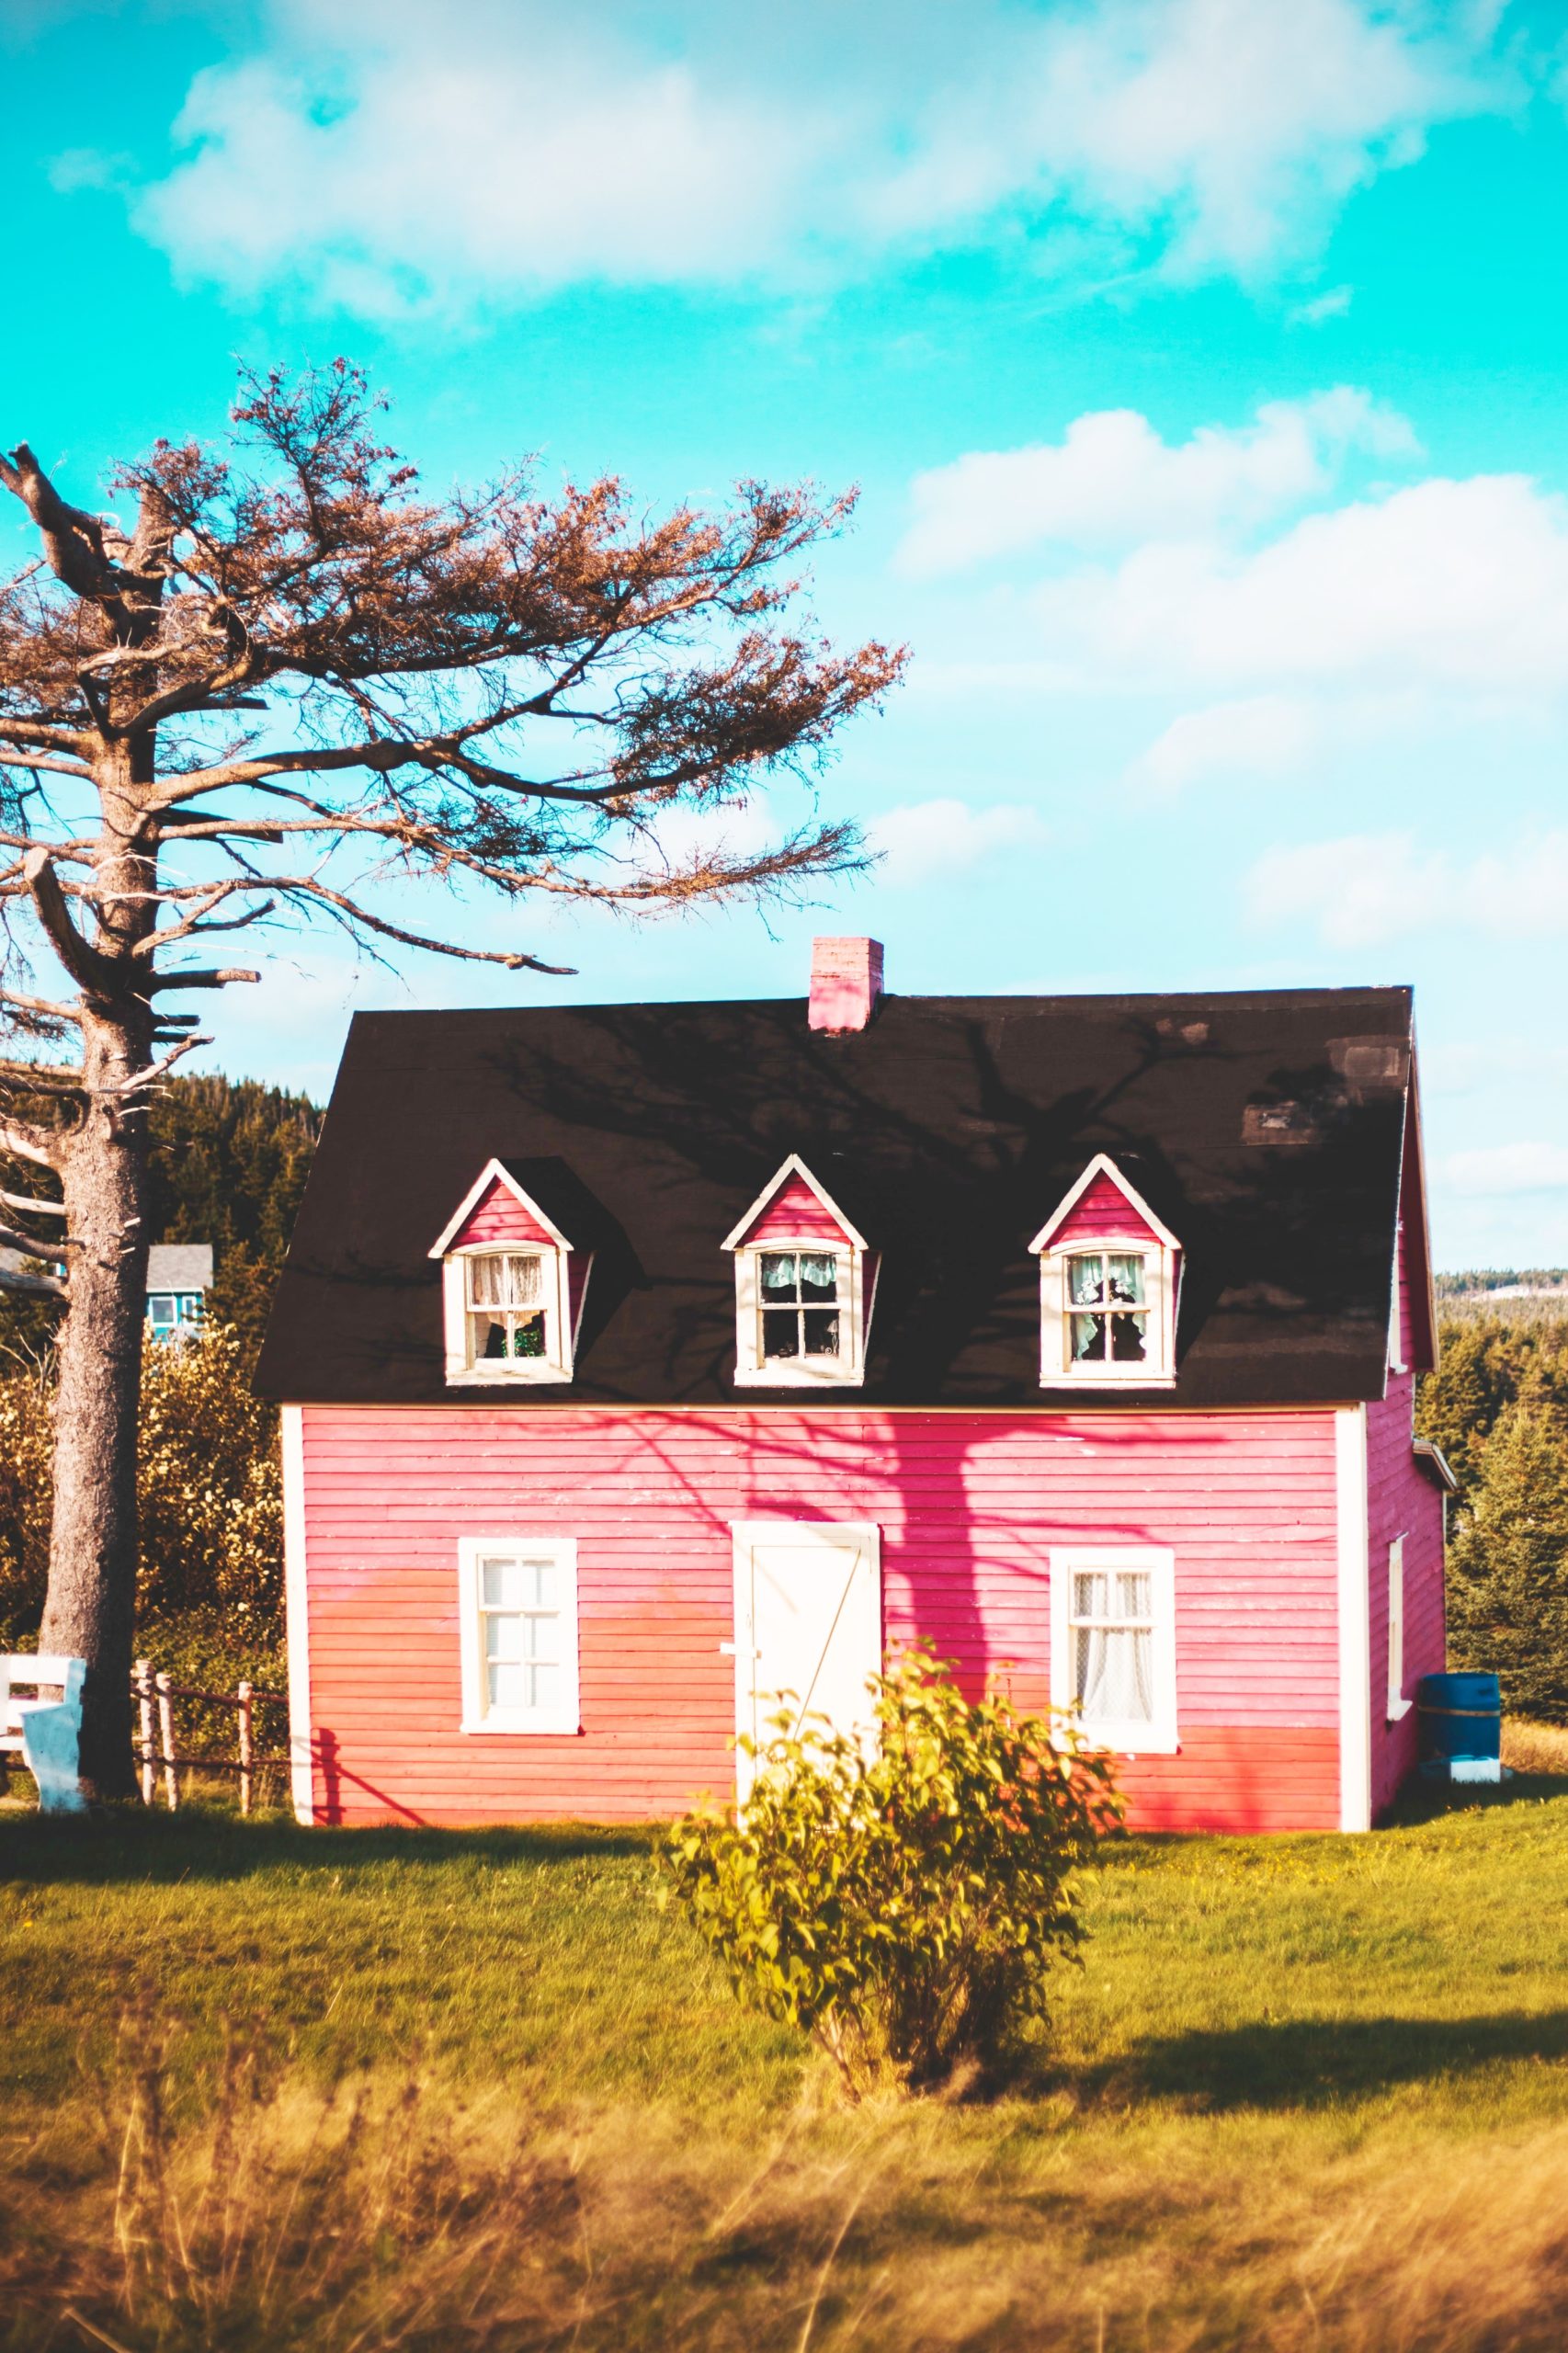 <img src="pink.jpg" alt="pink house with grass"/> 